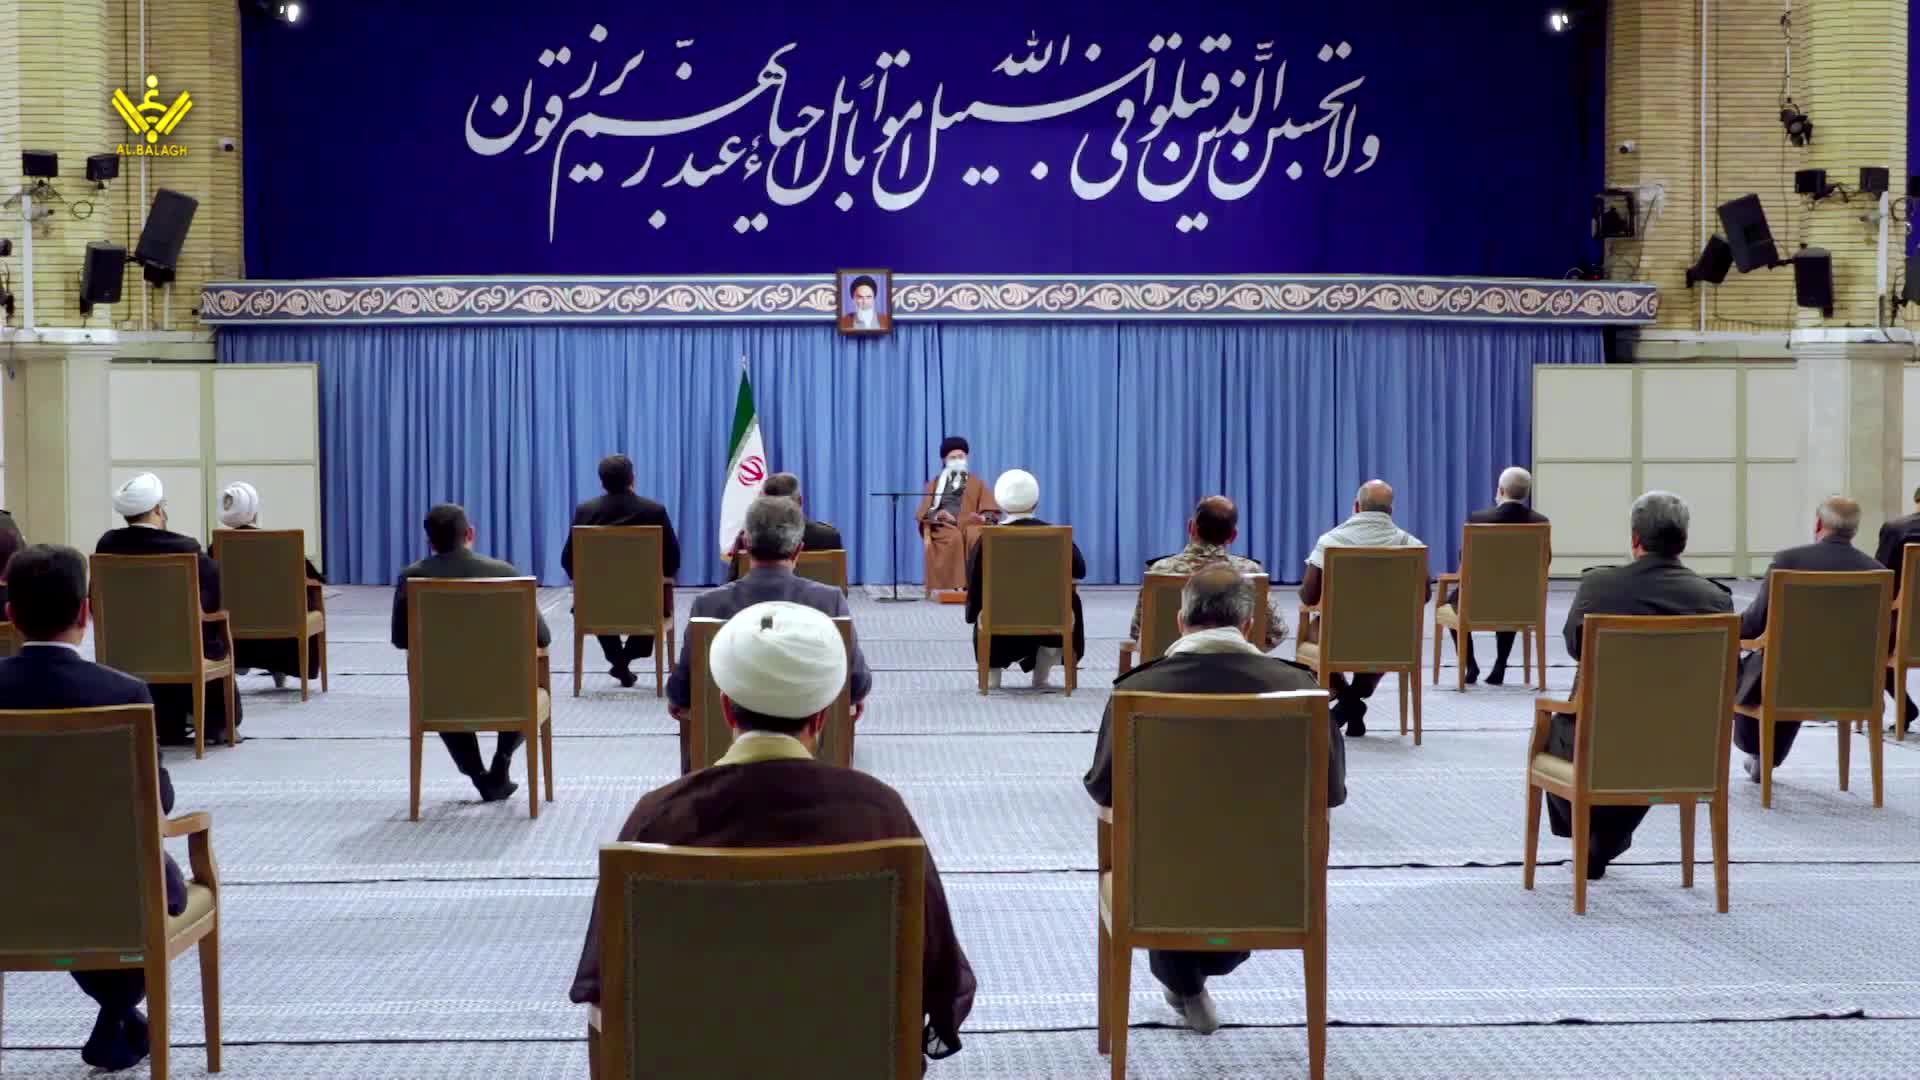 [Imam Khamenei] Shuhada Khanwada, Shuhada aur Hum | شھدا و خانوادہ شھدا اور ہم | Urdu